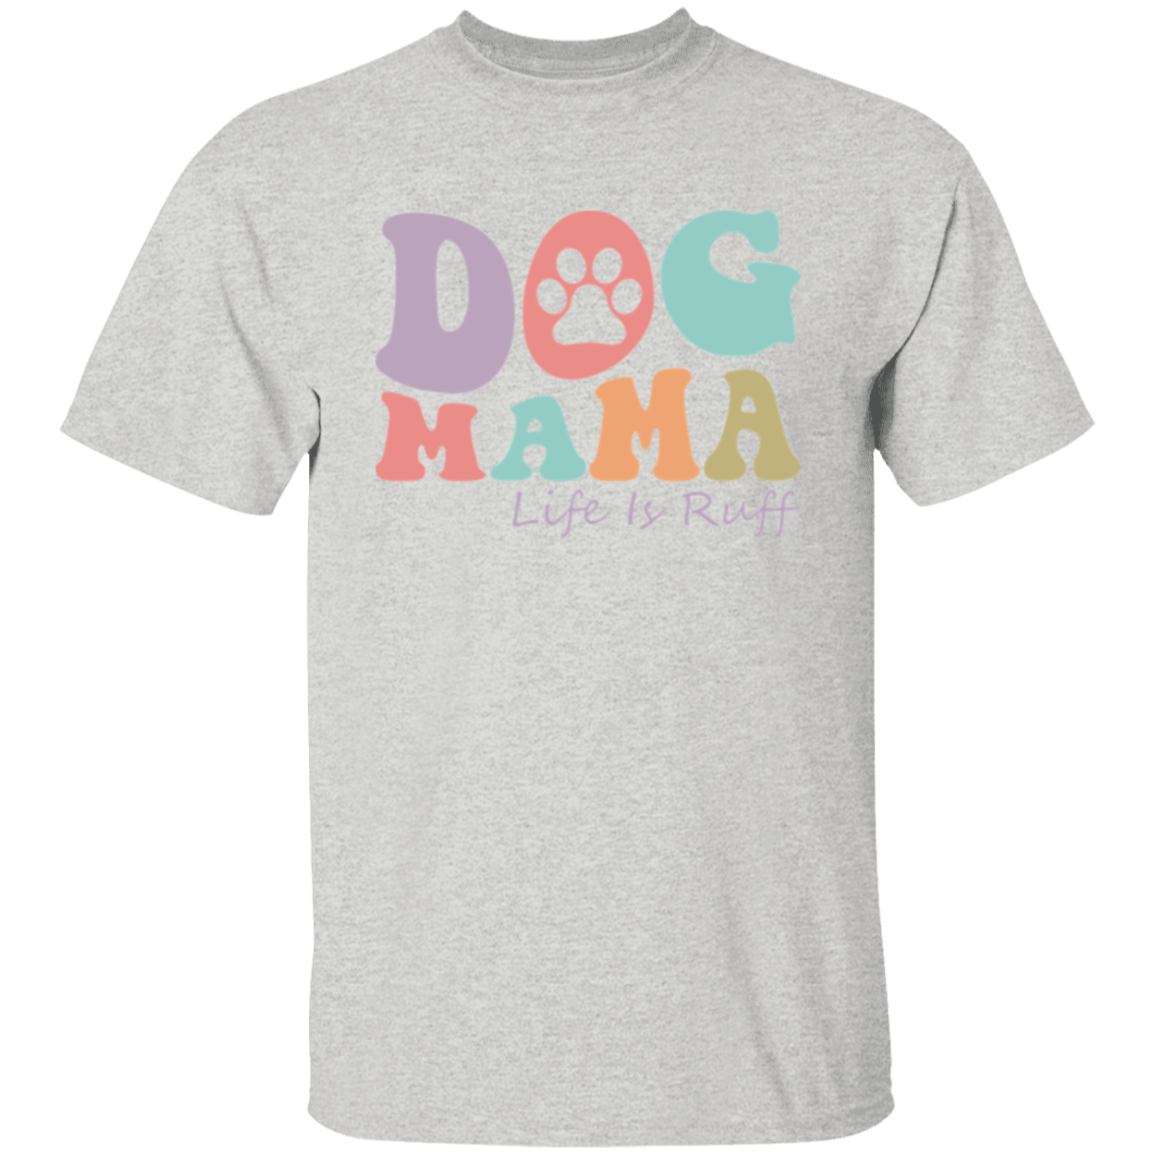 Dog Mama Life is Ruff Rescue T-Shirt